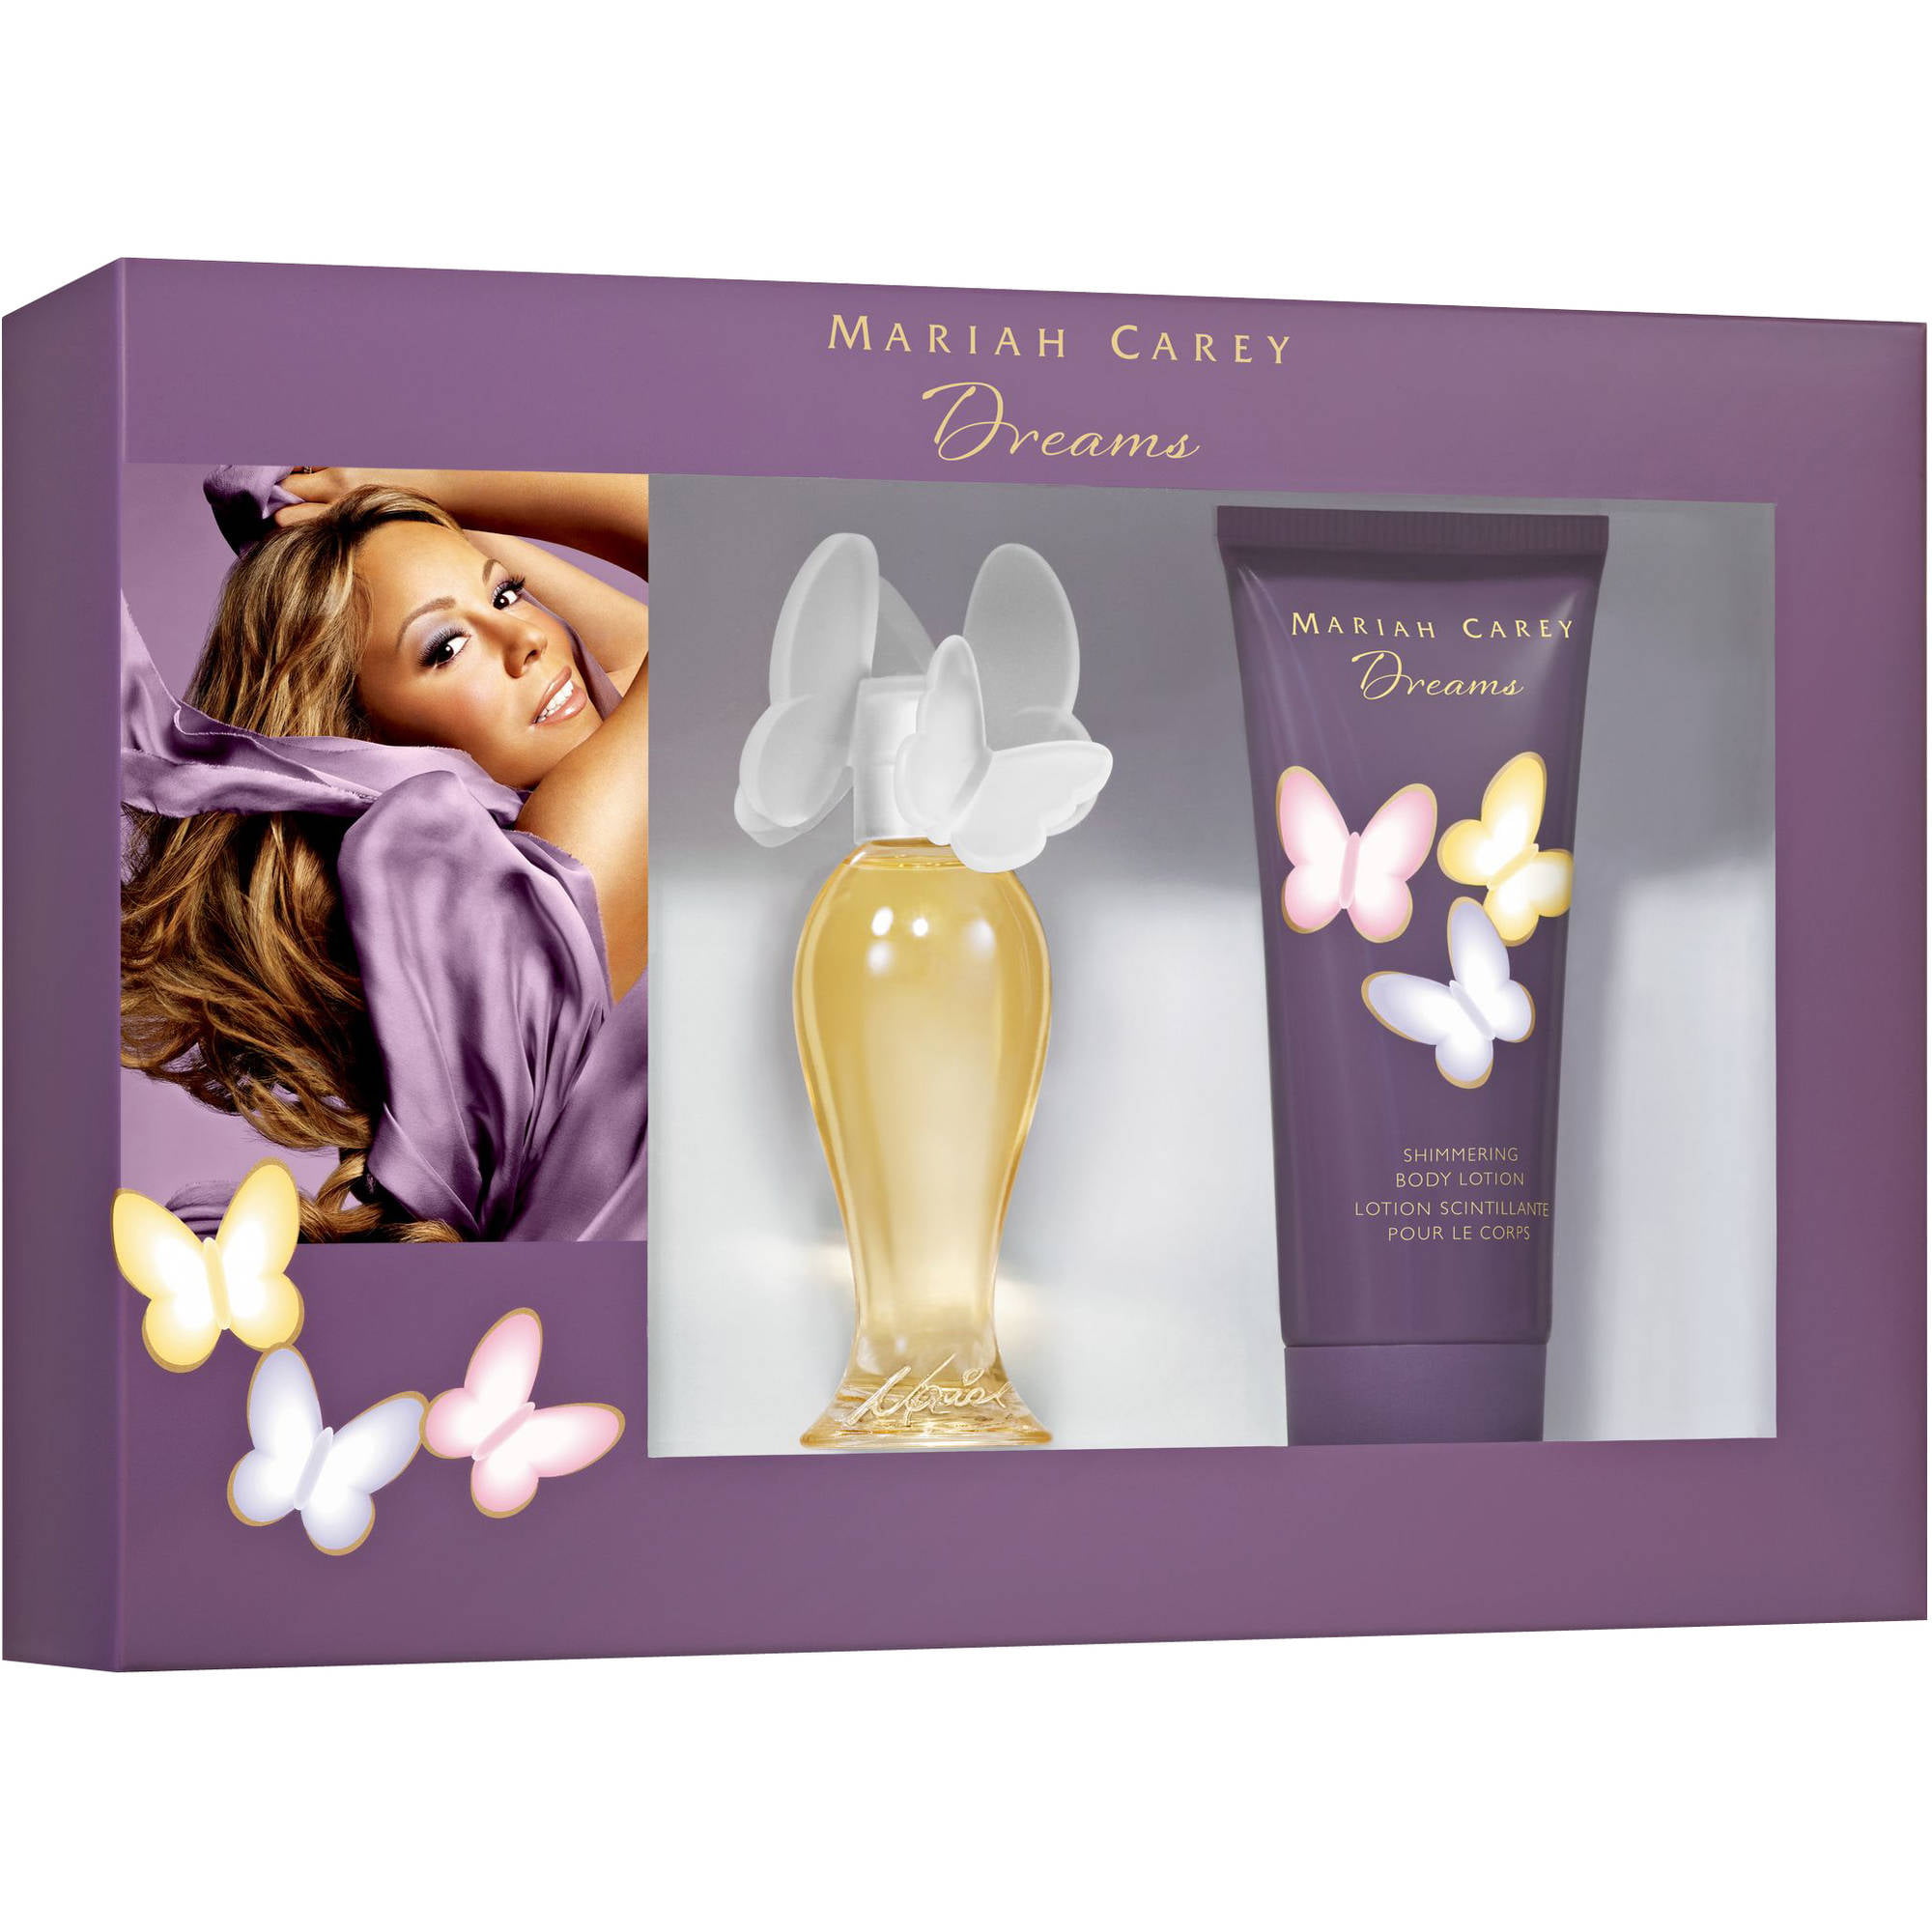 Mariah Carey Dreams by Mariah Carey 1.7 oz Eau de Parfum Spray / Women